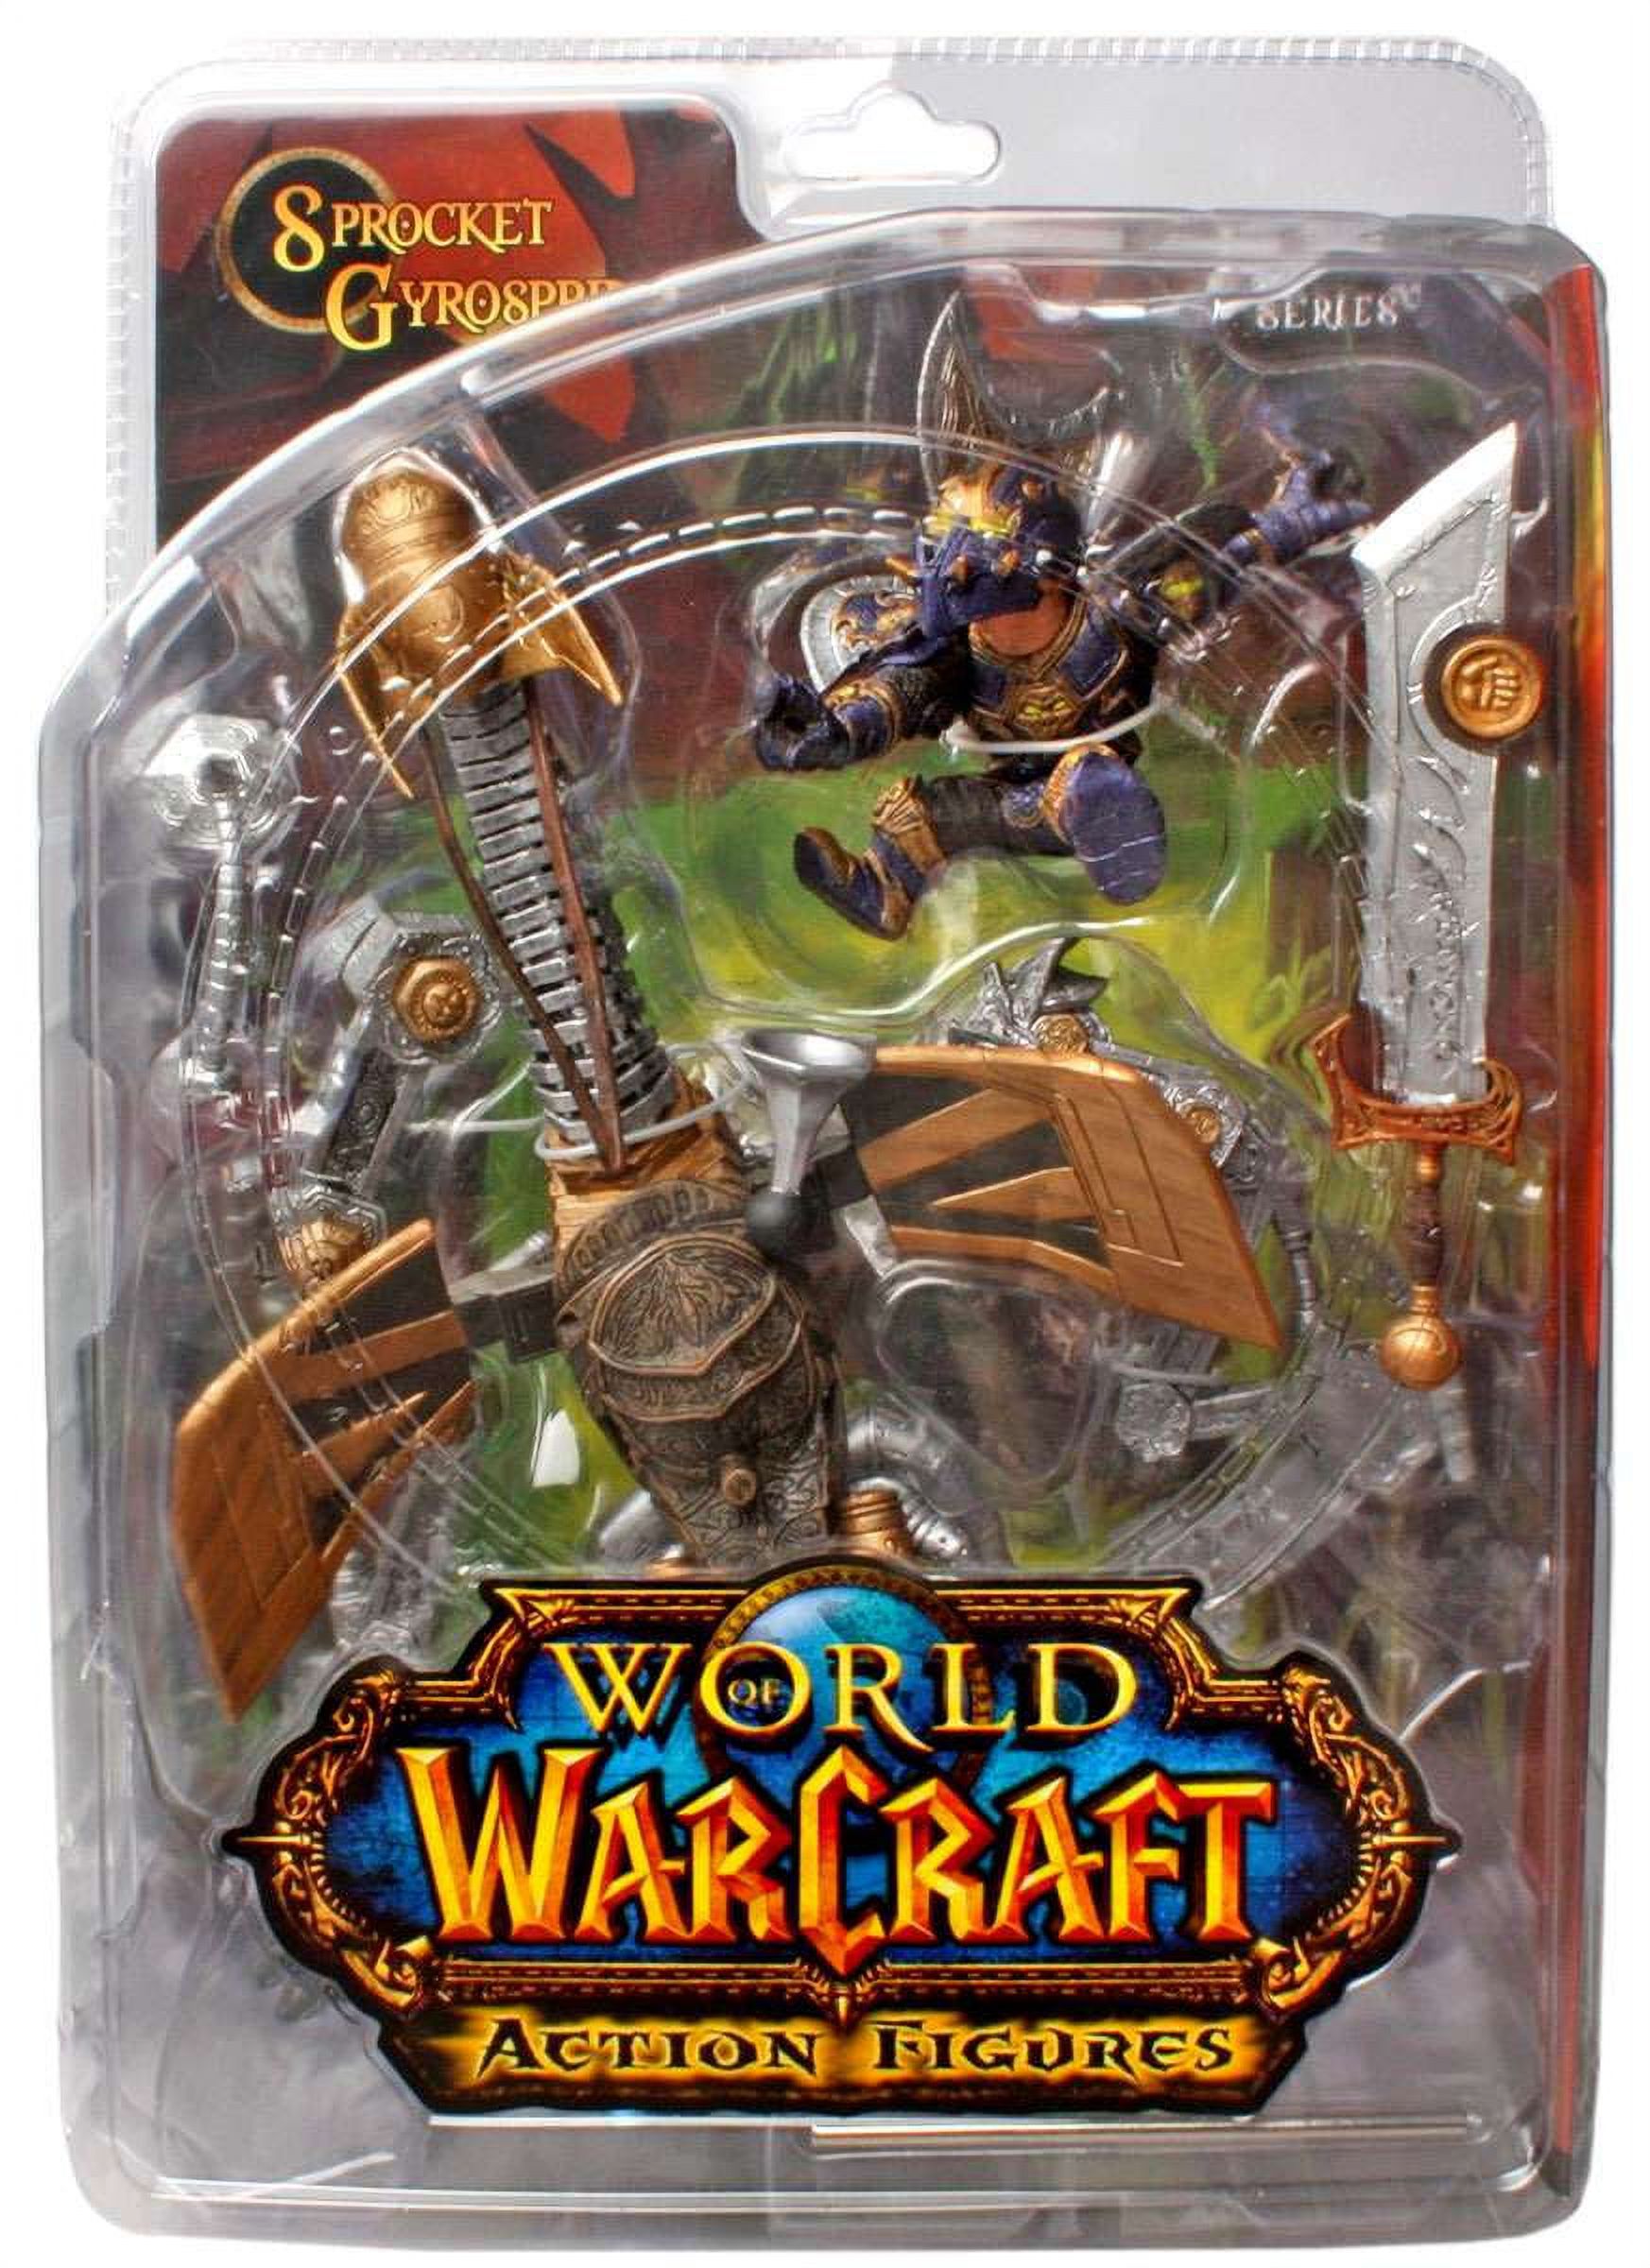 World of Warcraft Series 2 Sprocket Gyrospring Action Figure (Gnome Warrior) - image 1 of 2